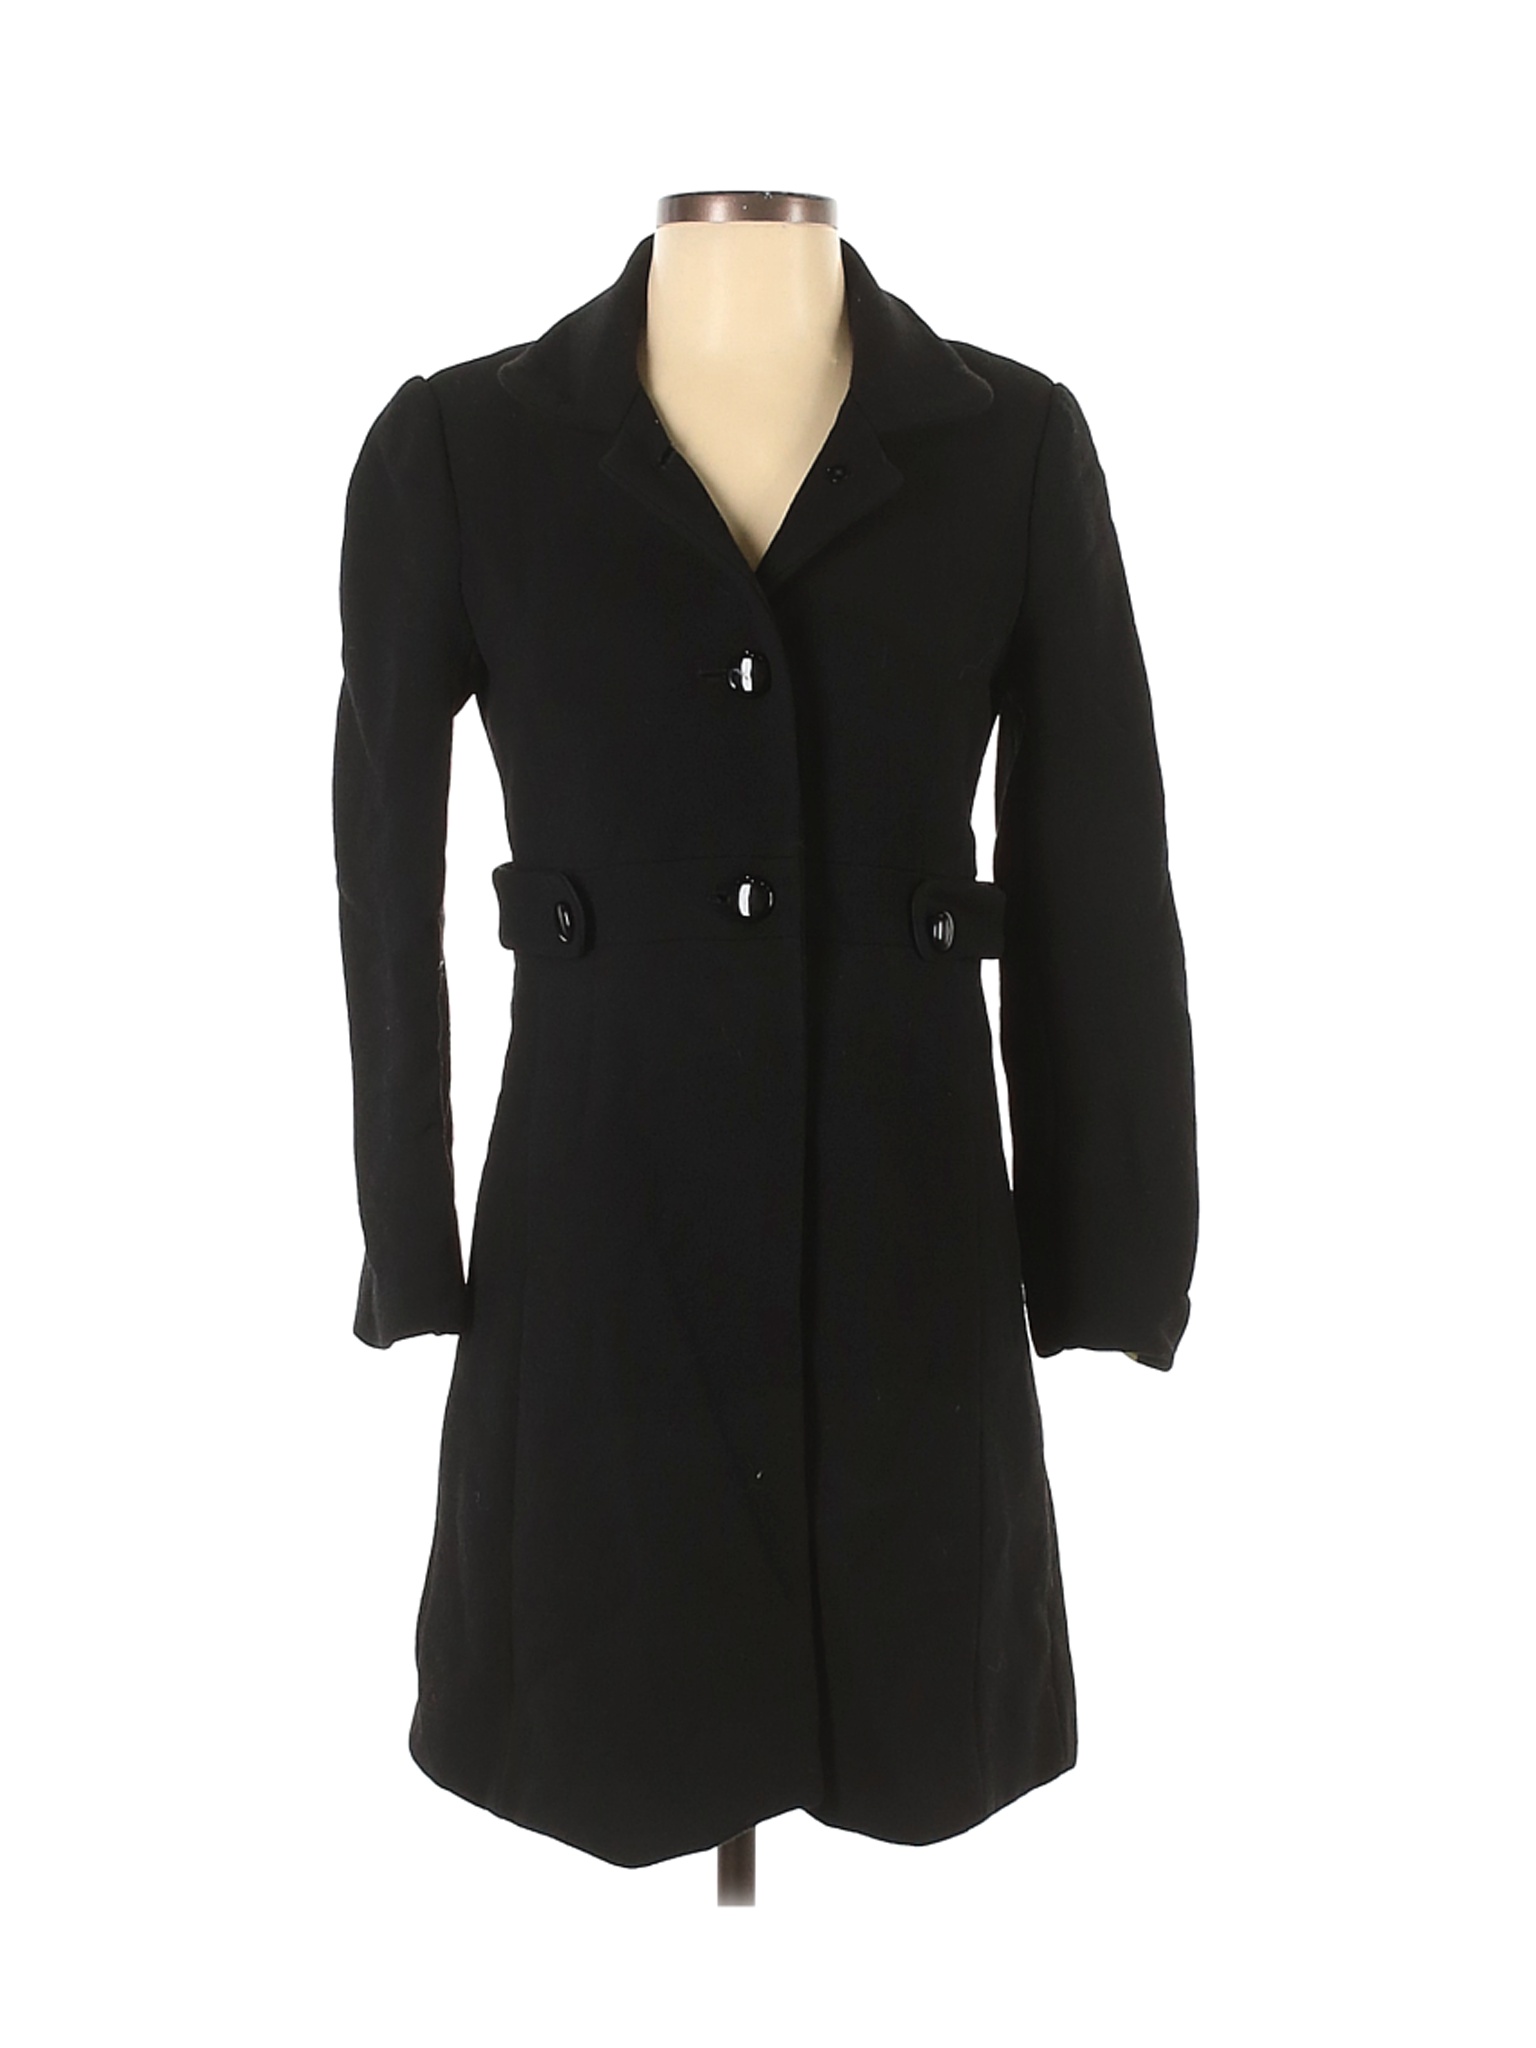 J.Crew Women Black Wool Coat 2 | eBay